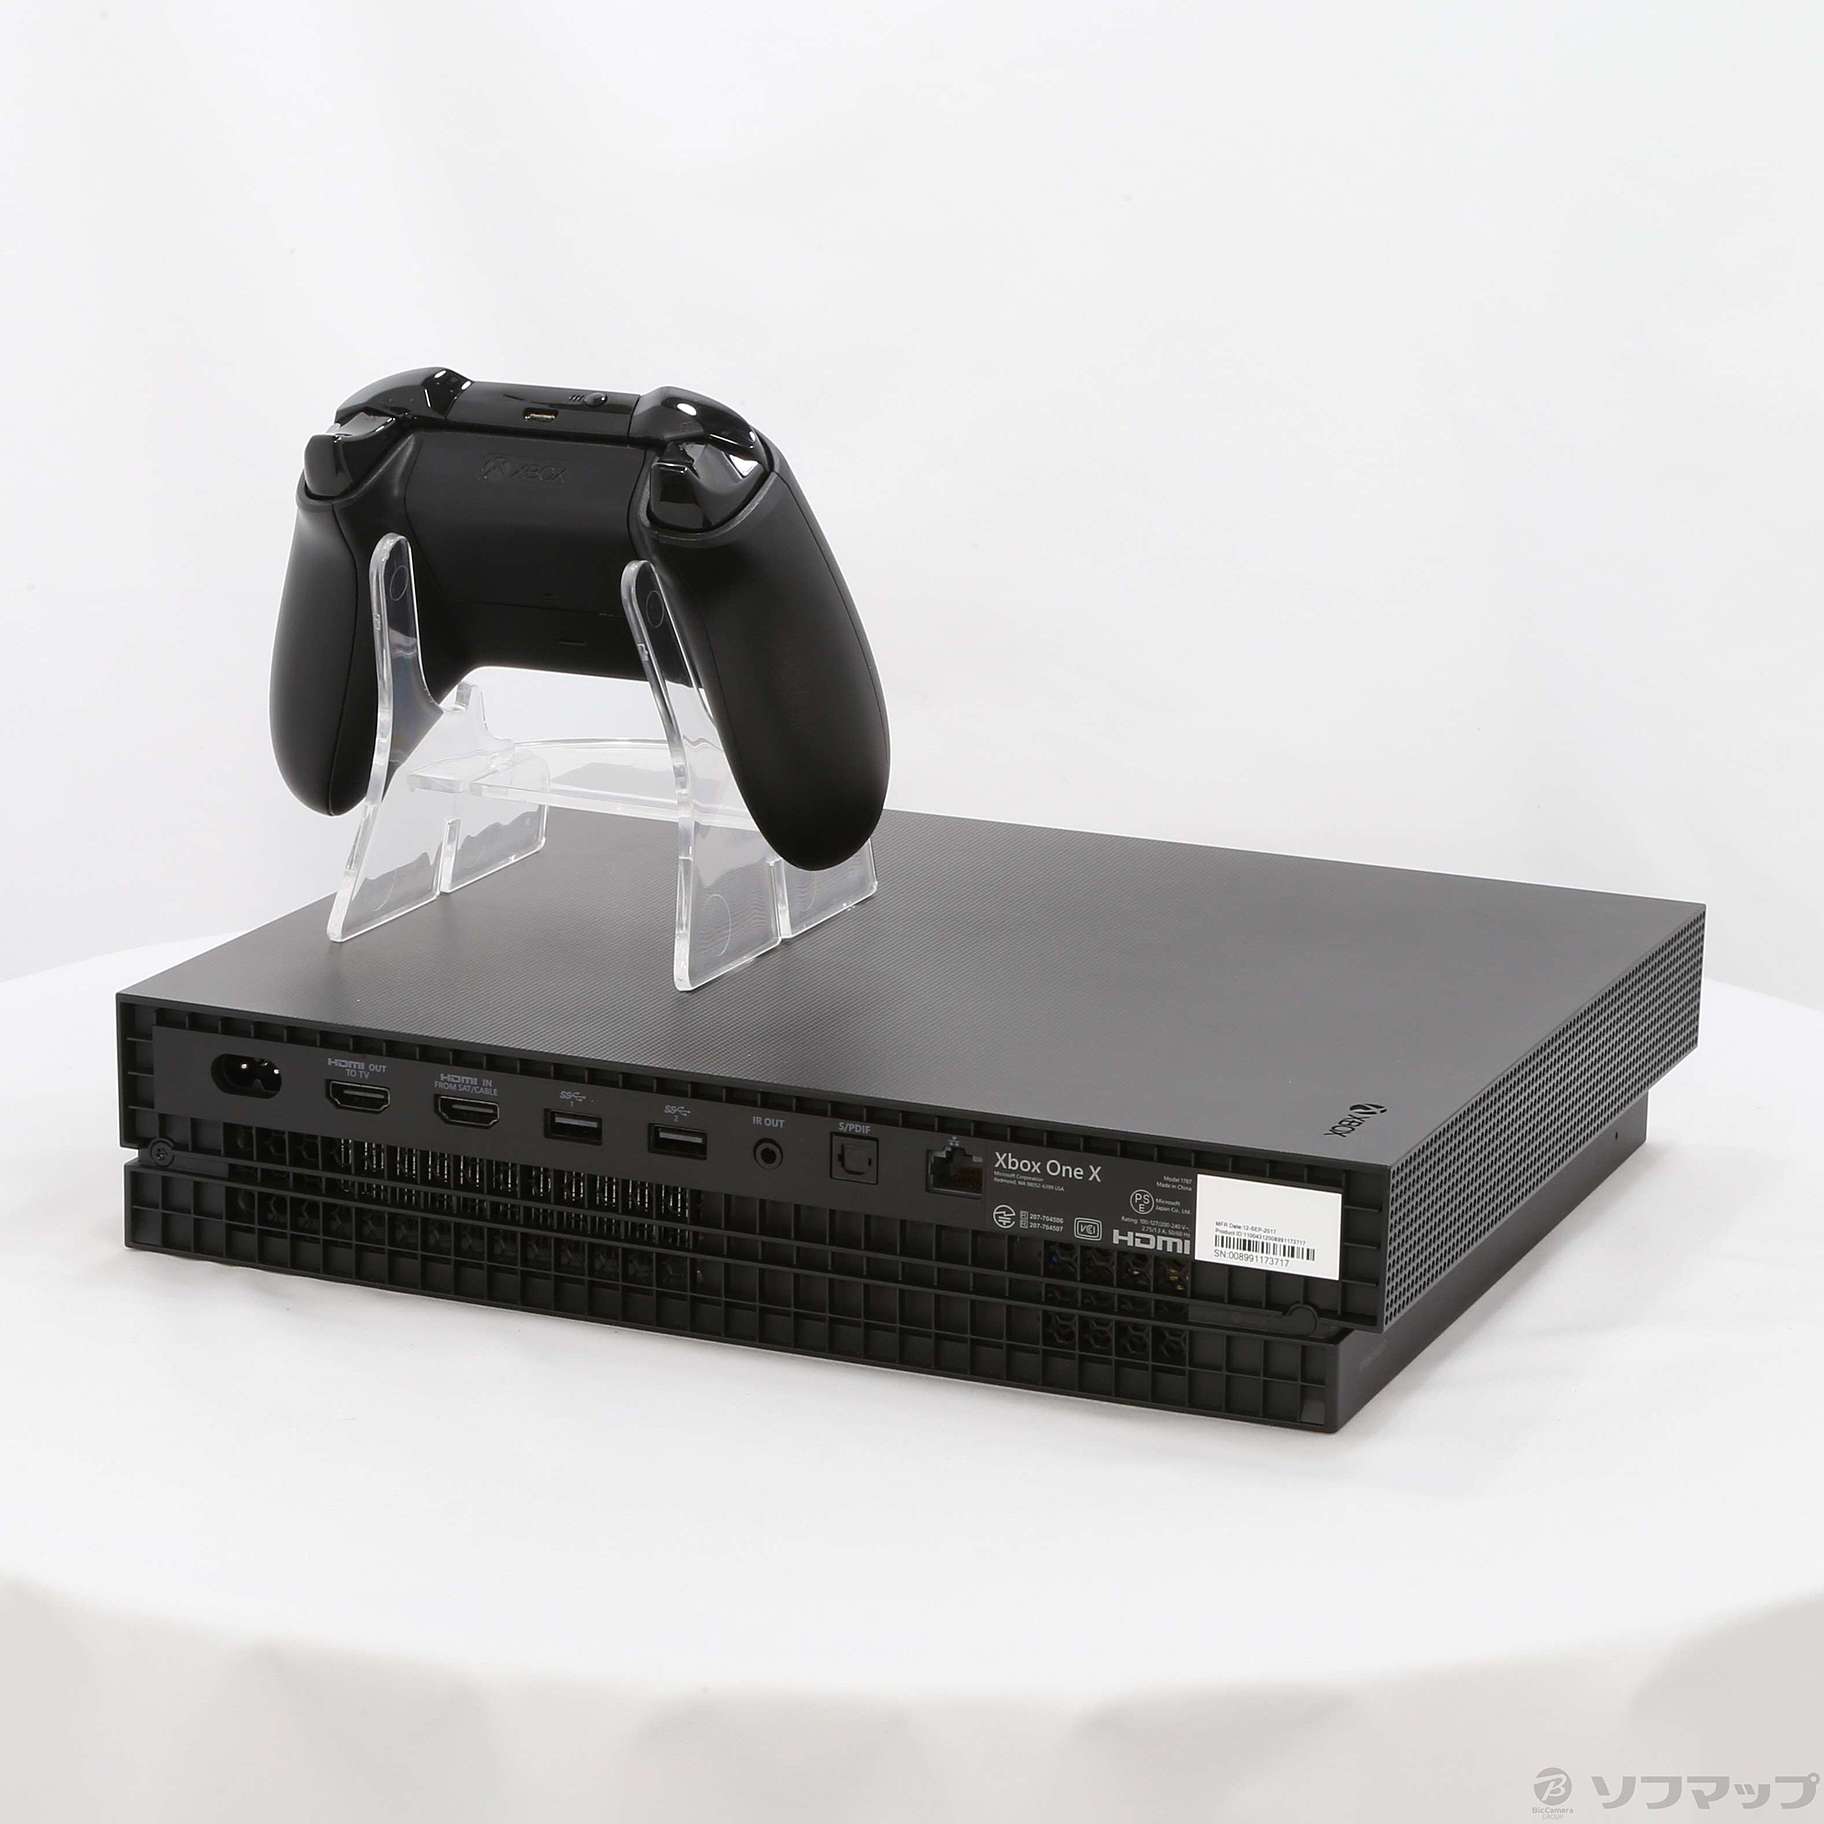 FMP00015 Xbox One X Project Scorpio エディション FMP00015